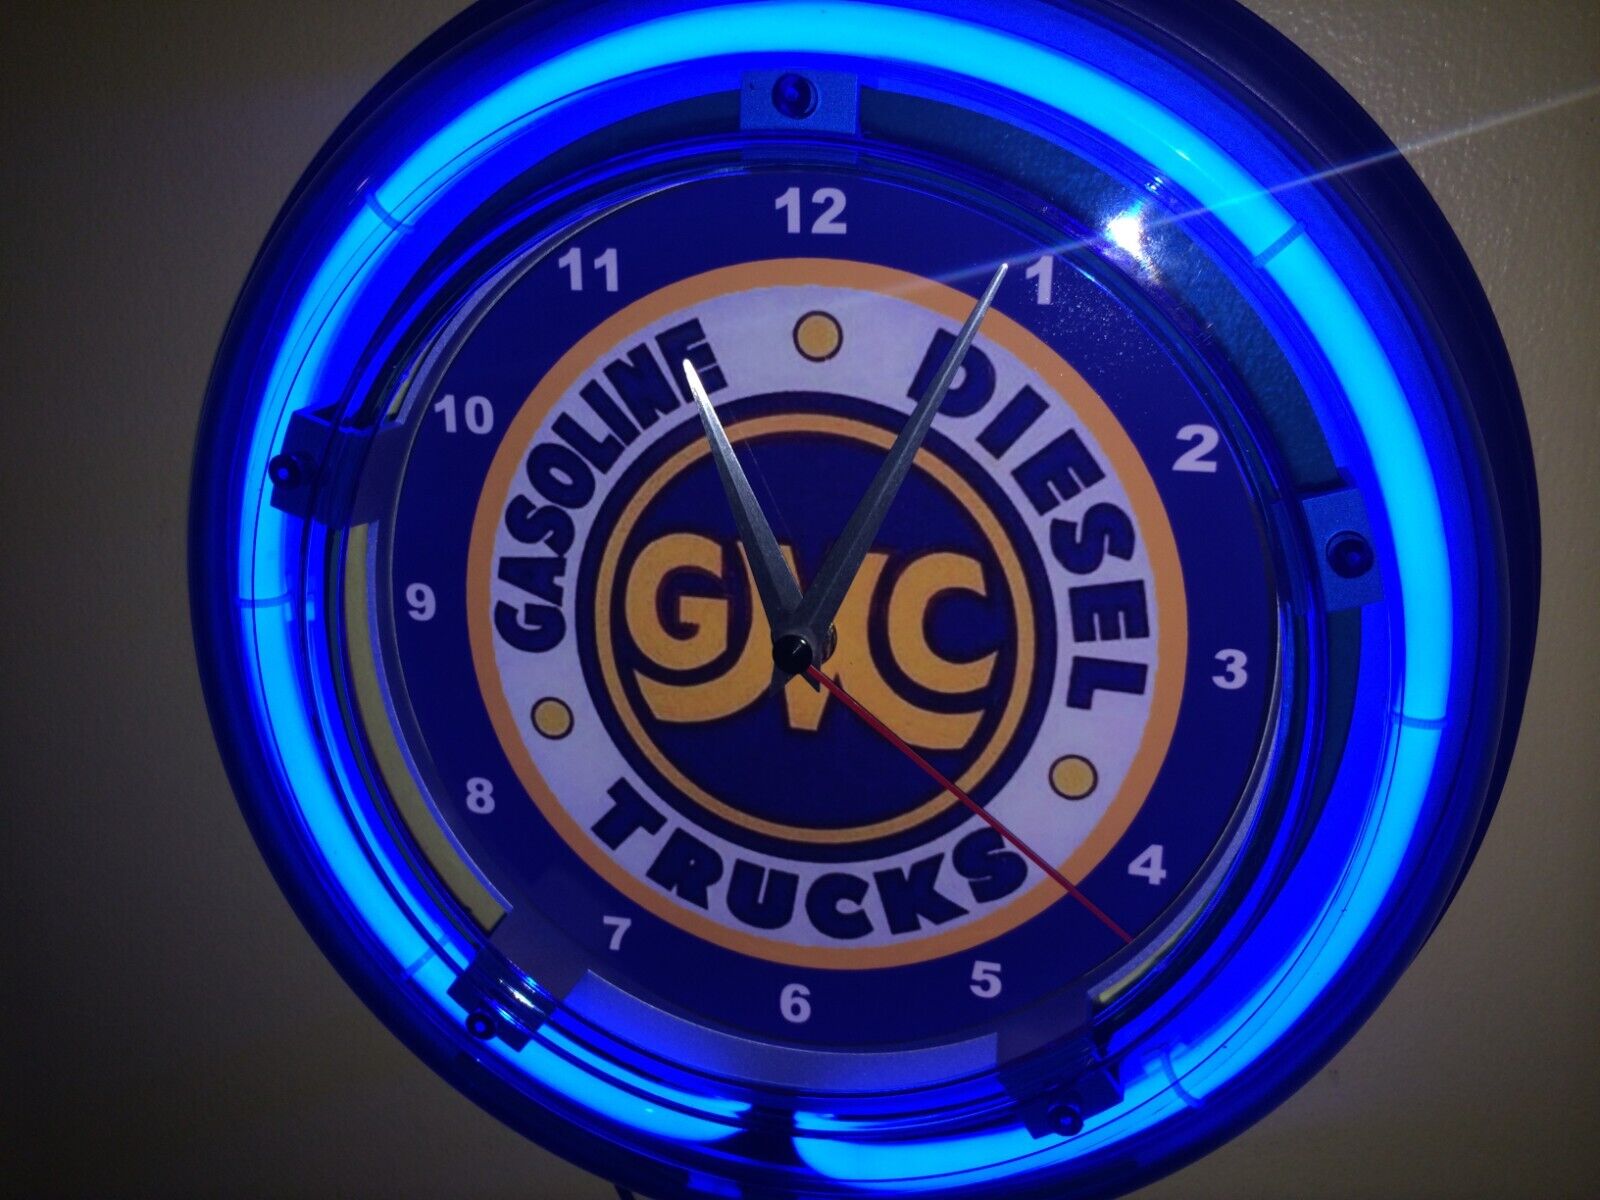 GMC General Motors Trucks Garage Dealership Neon Wall Clock Advertising Sign